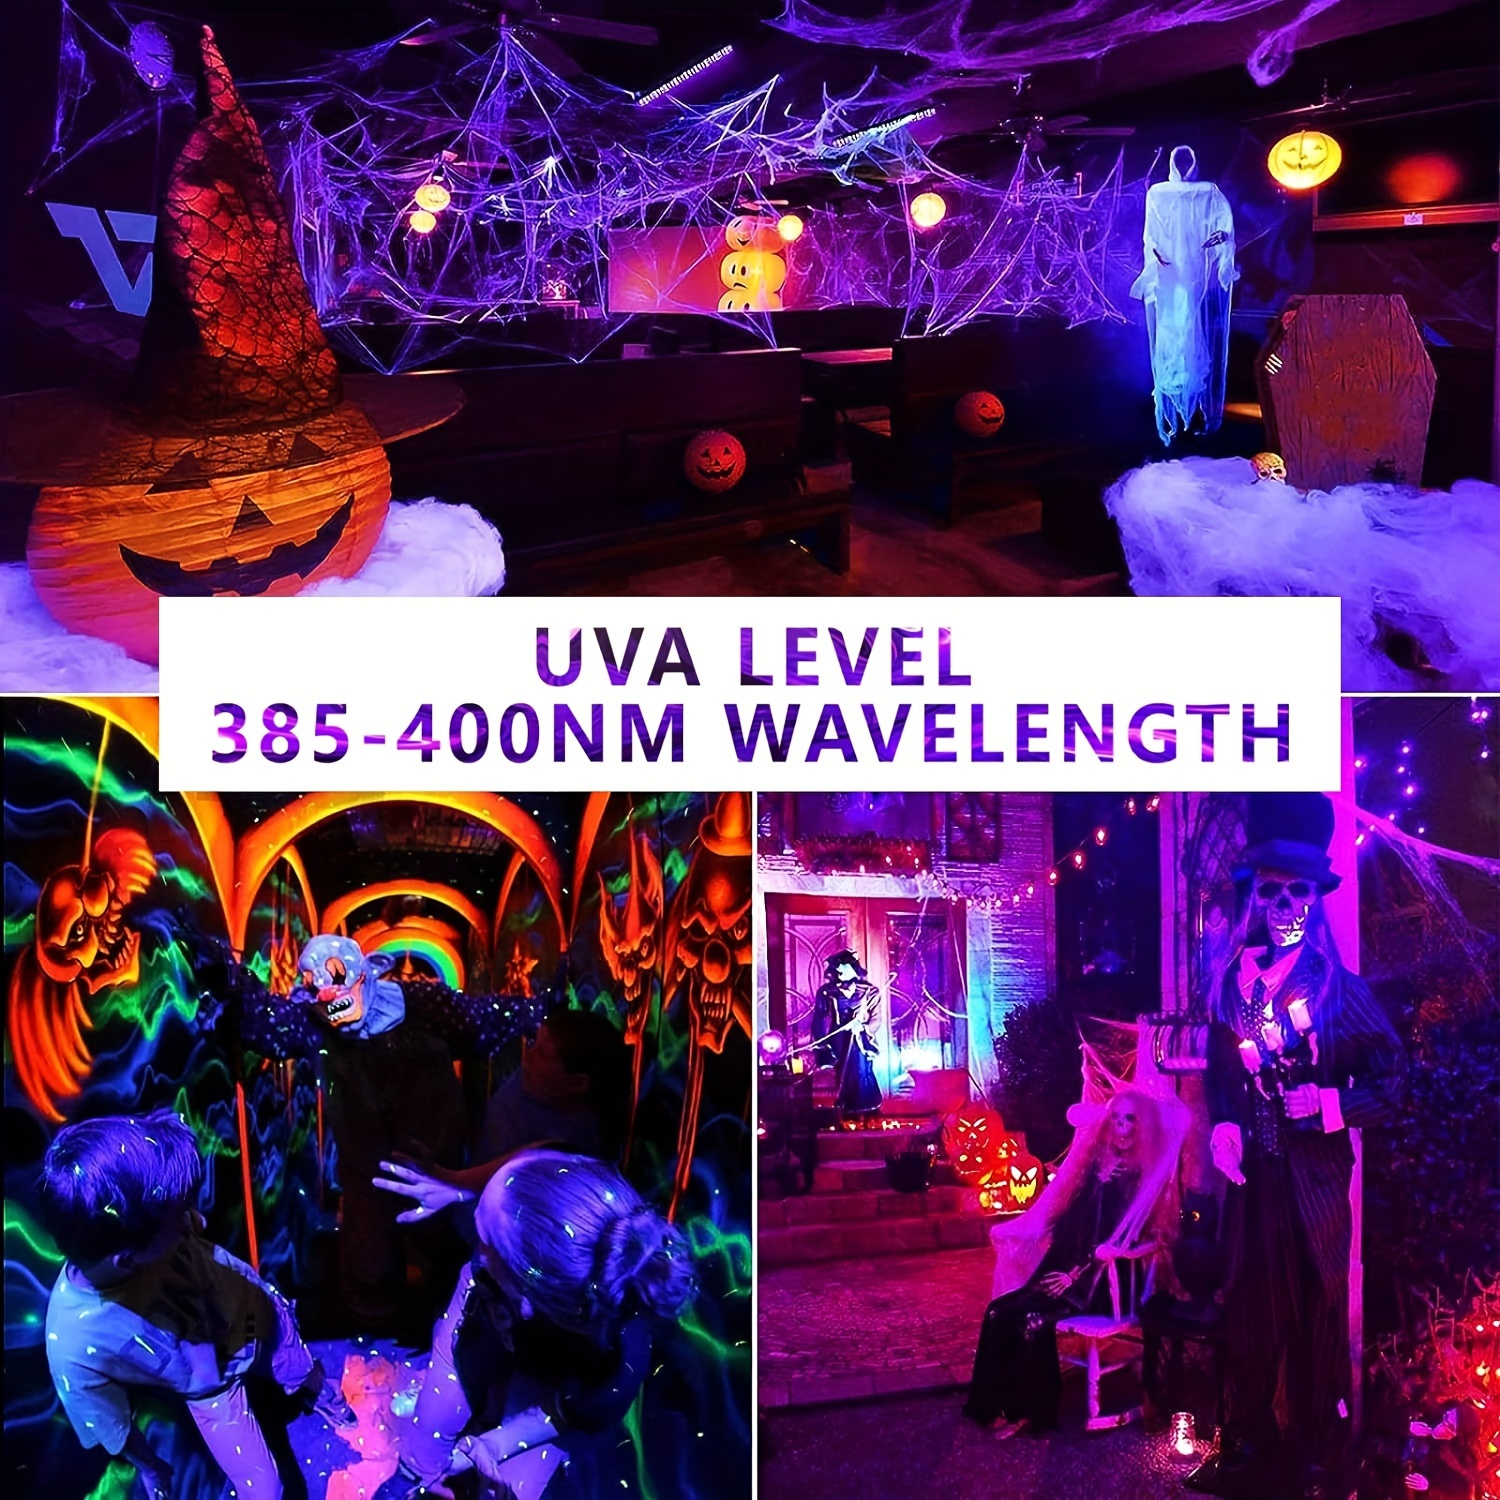 Uv Black Lights Led Blacklight Bar For Halloween Glow Party - Temu